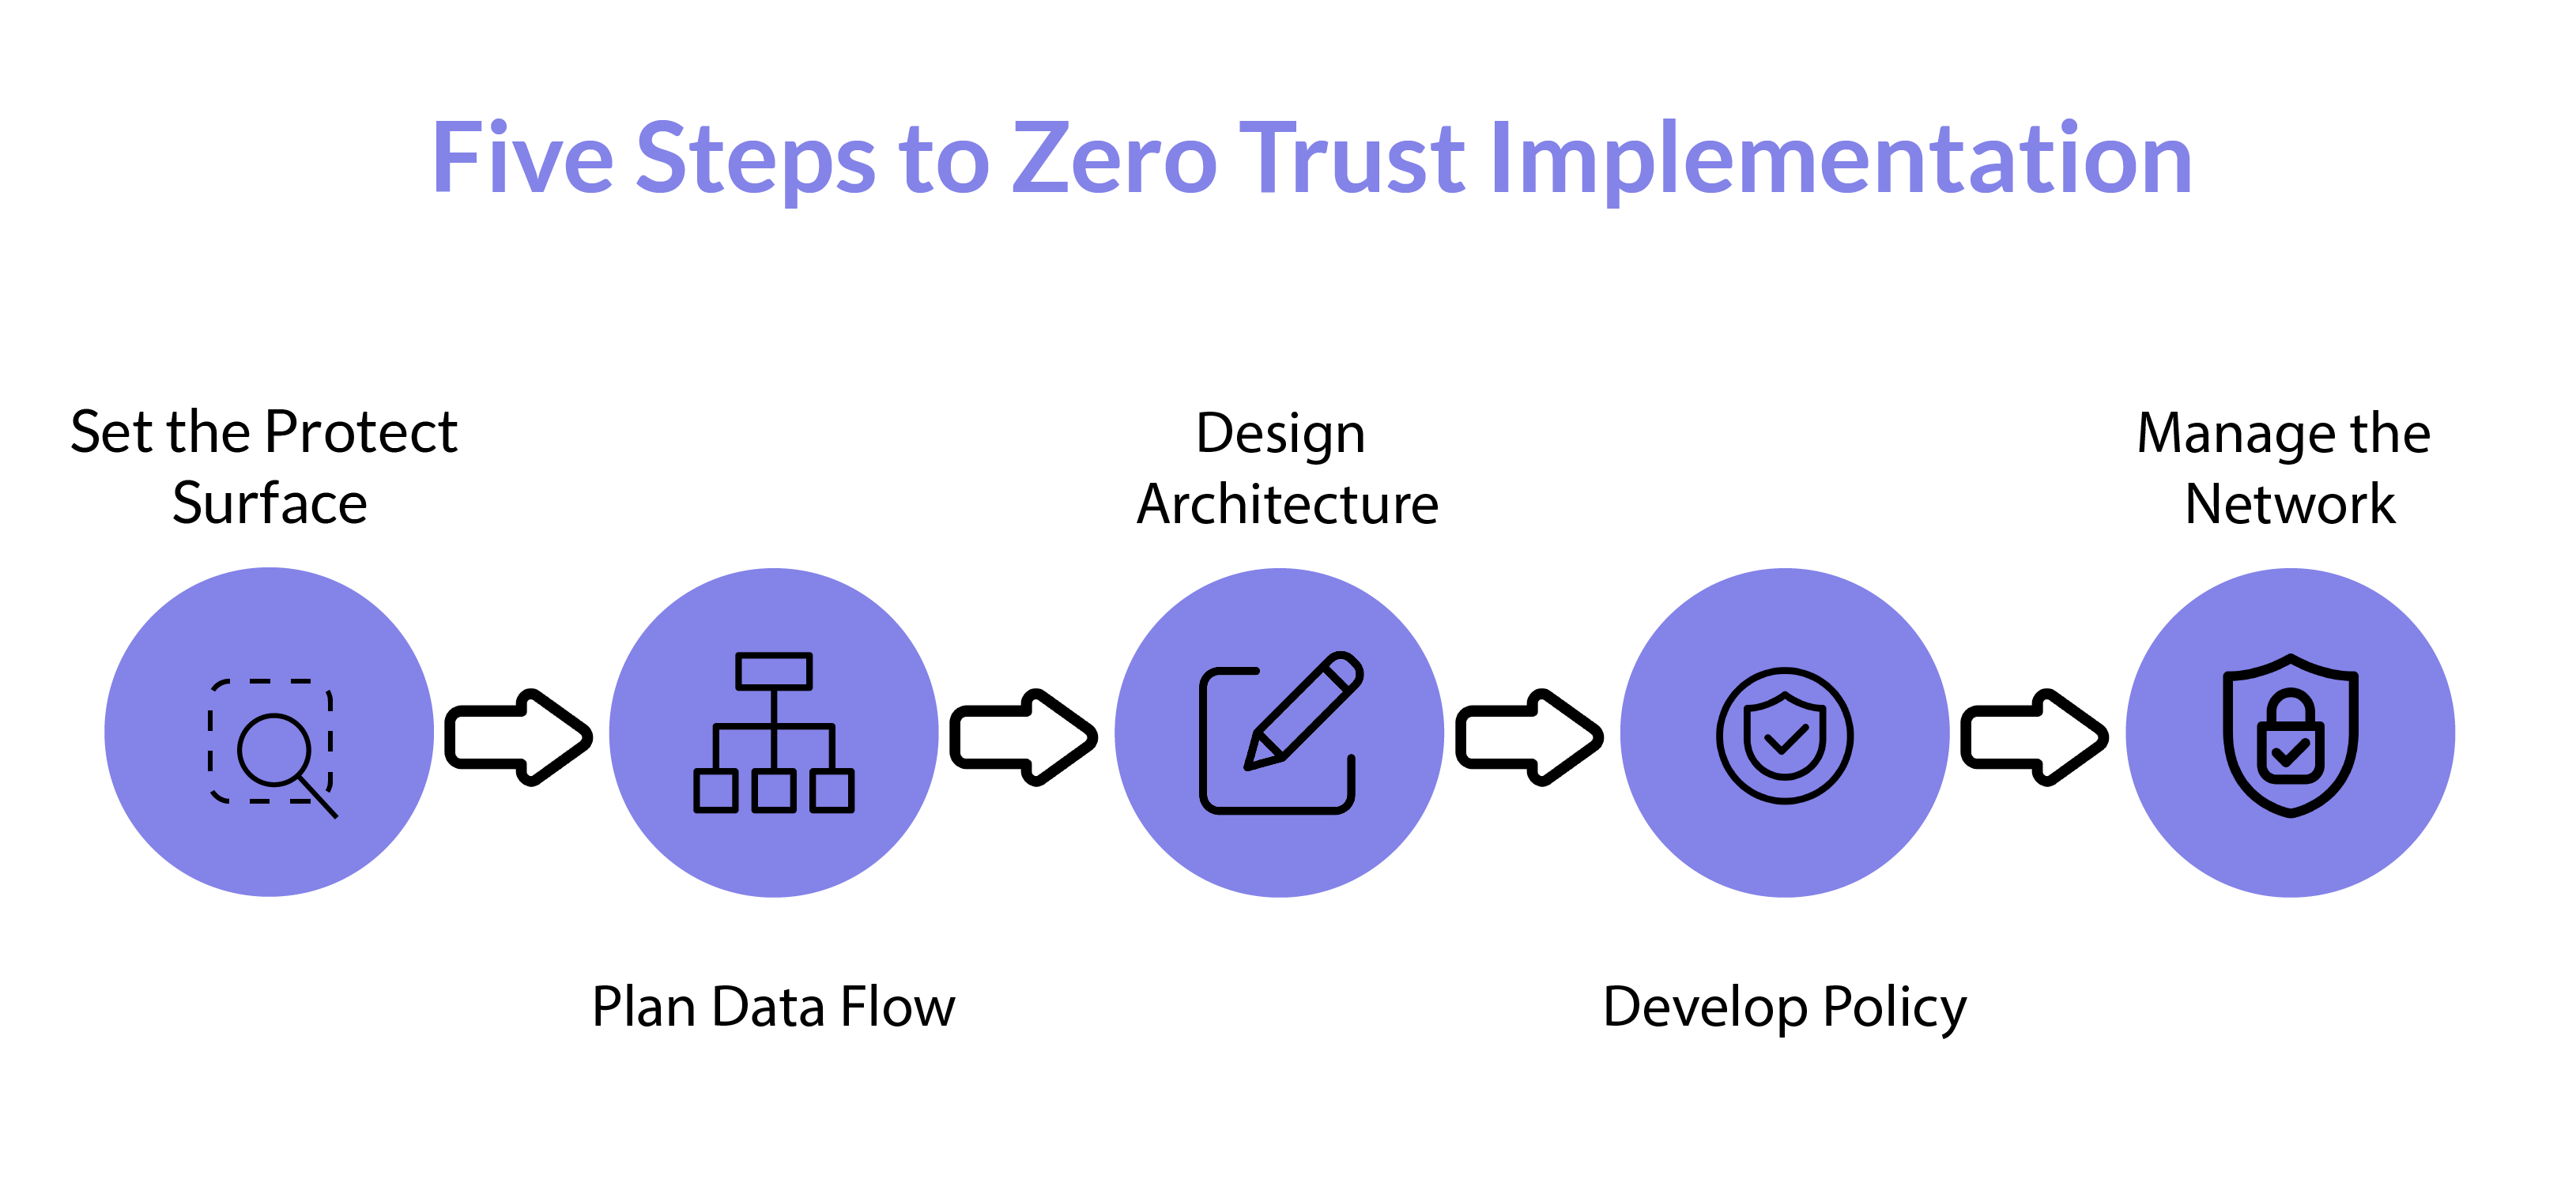 Five Steps to Zero Trust Implementation